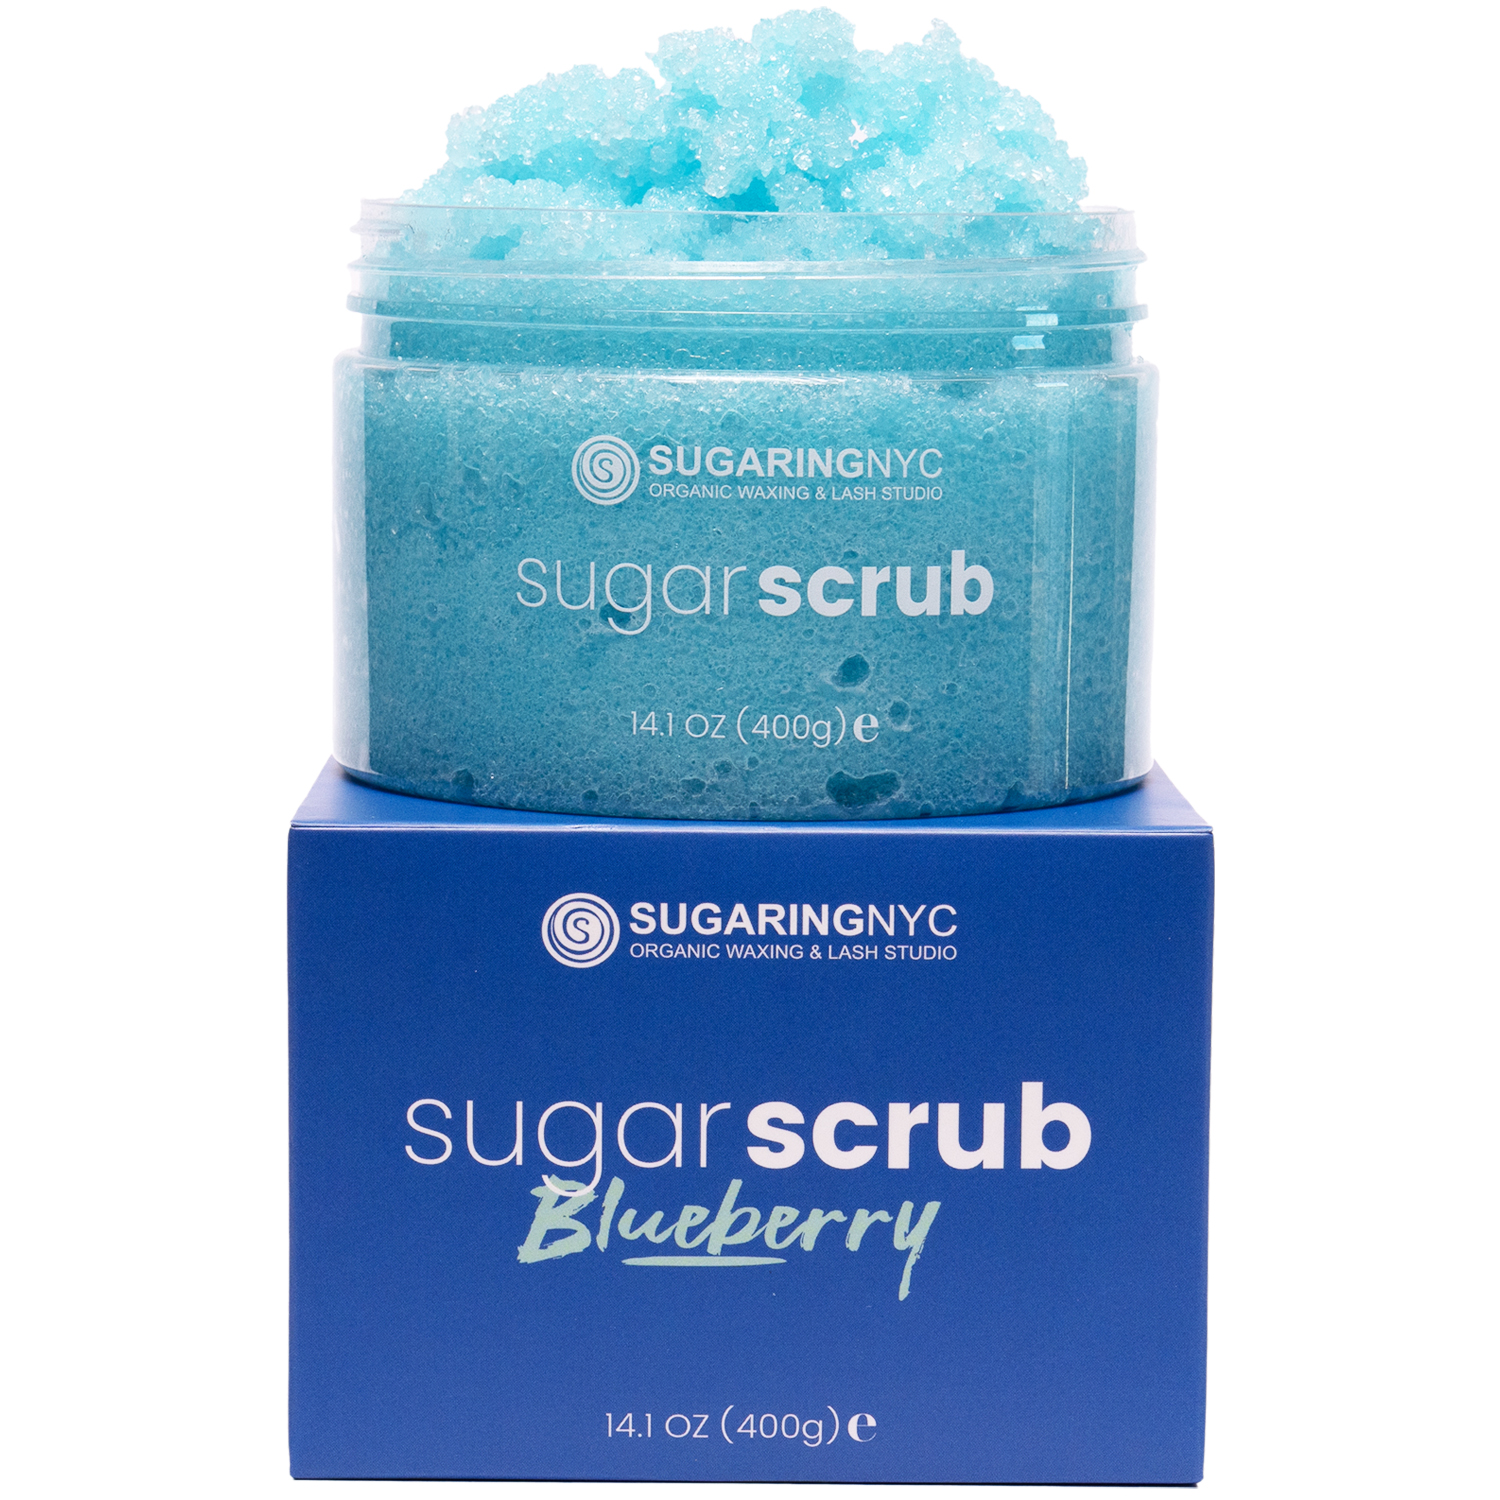 Sugaring NYC Signature Sugar Scrub – Sweet Blueberry